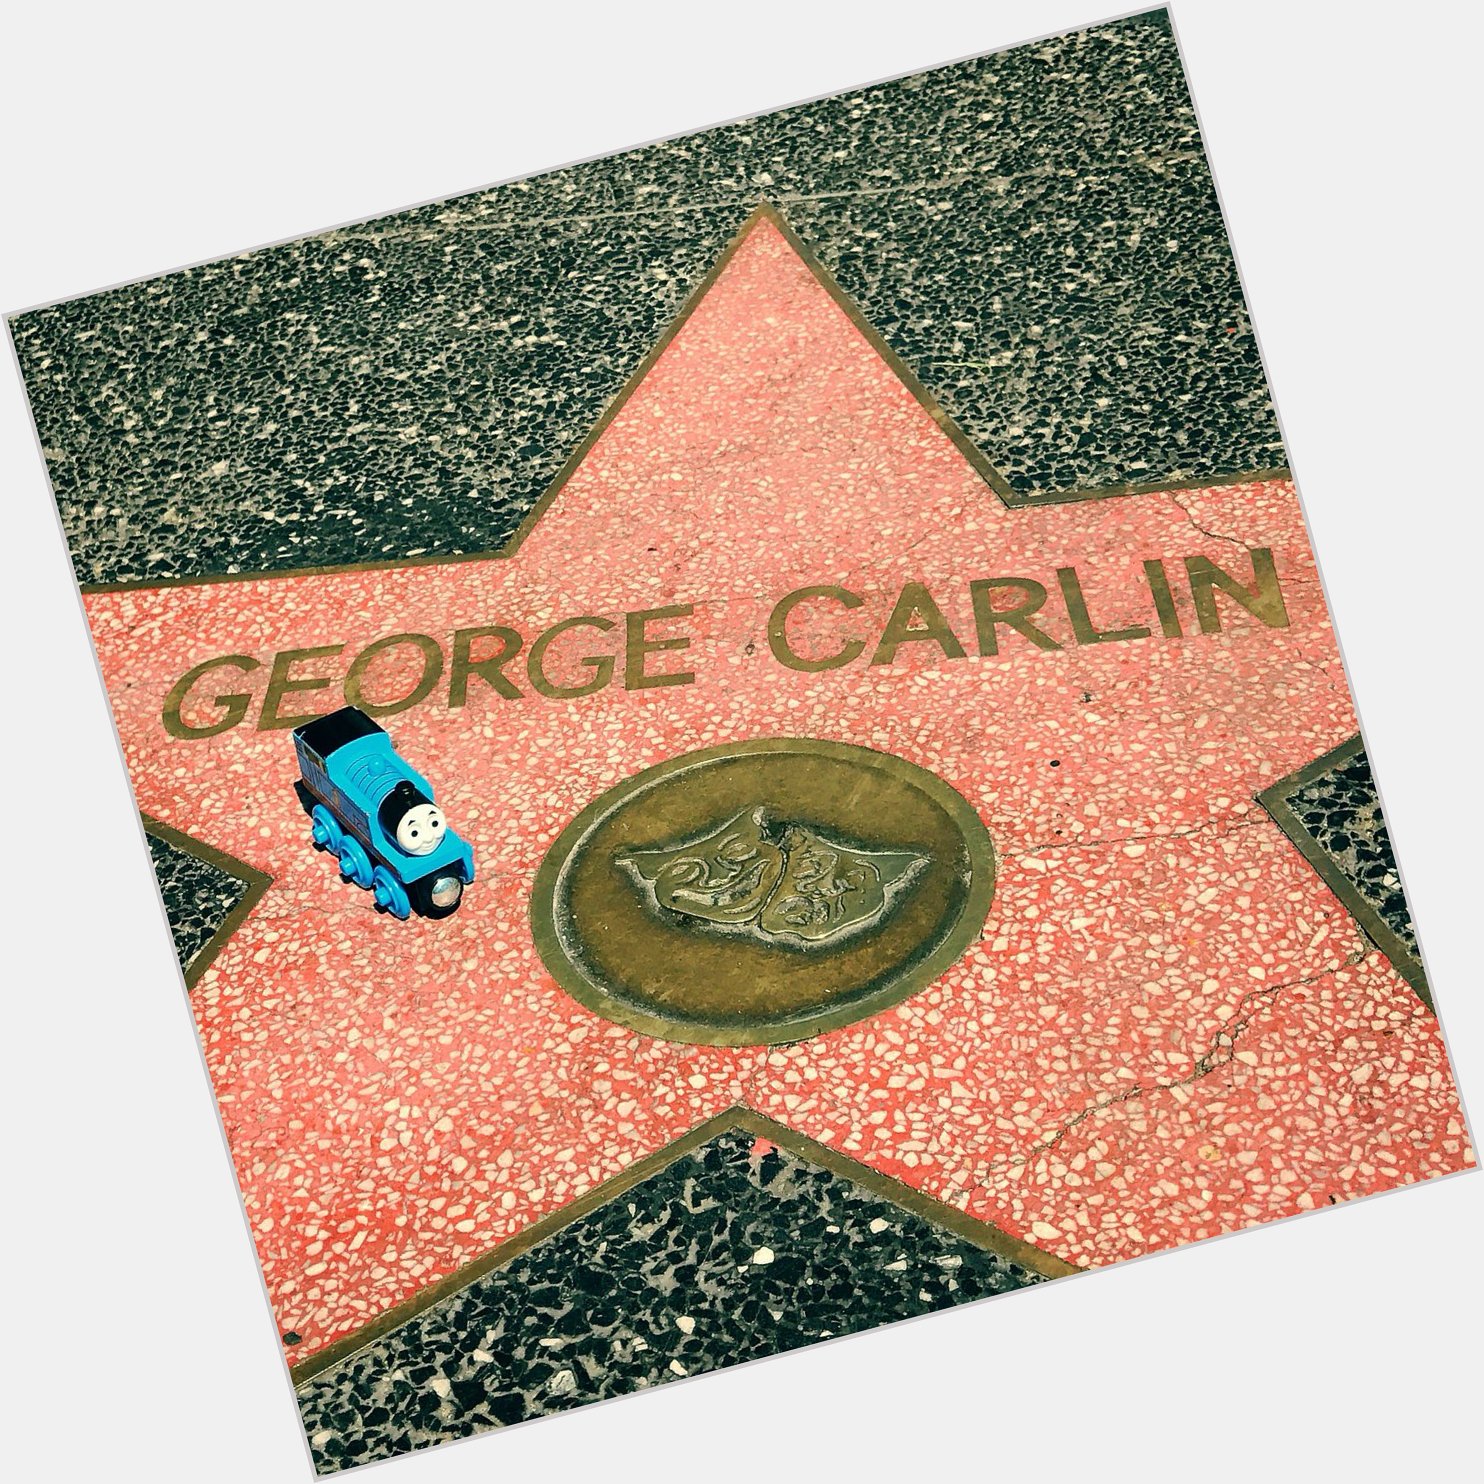 Happy birthday to Thomas narrator George Carlin! 